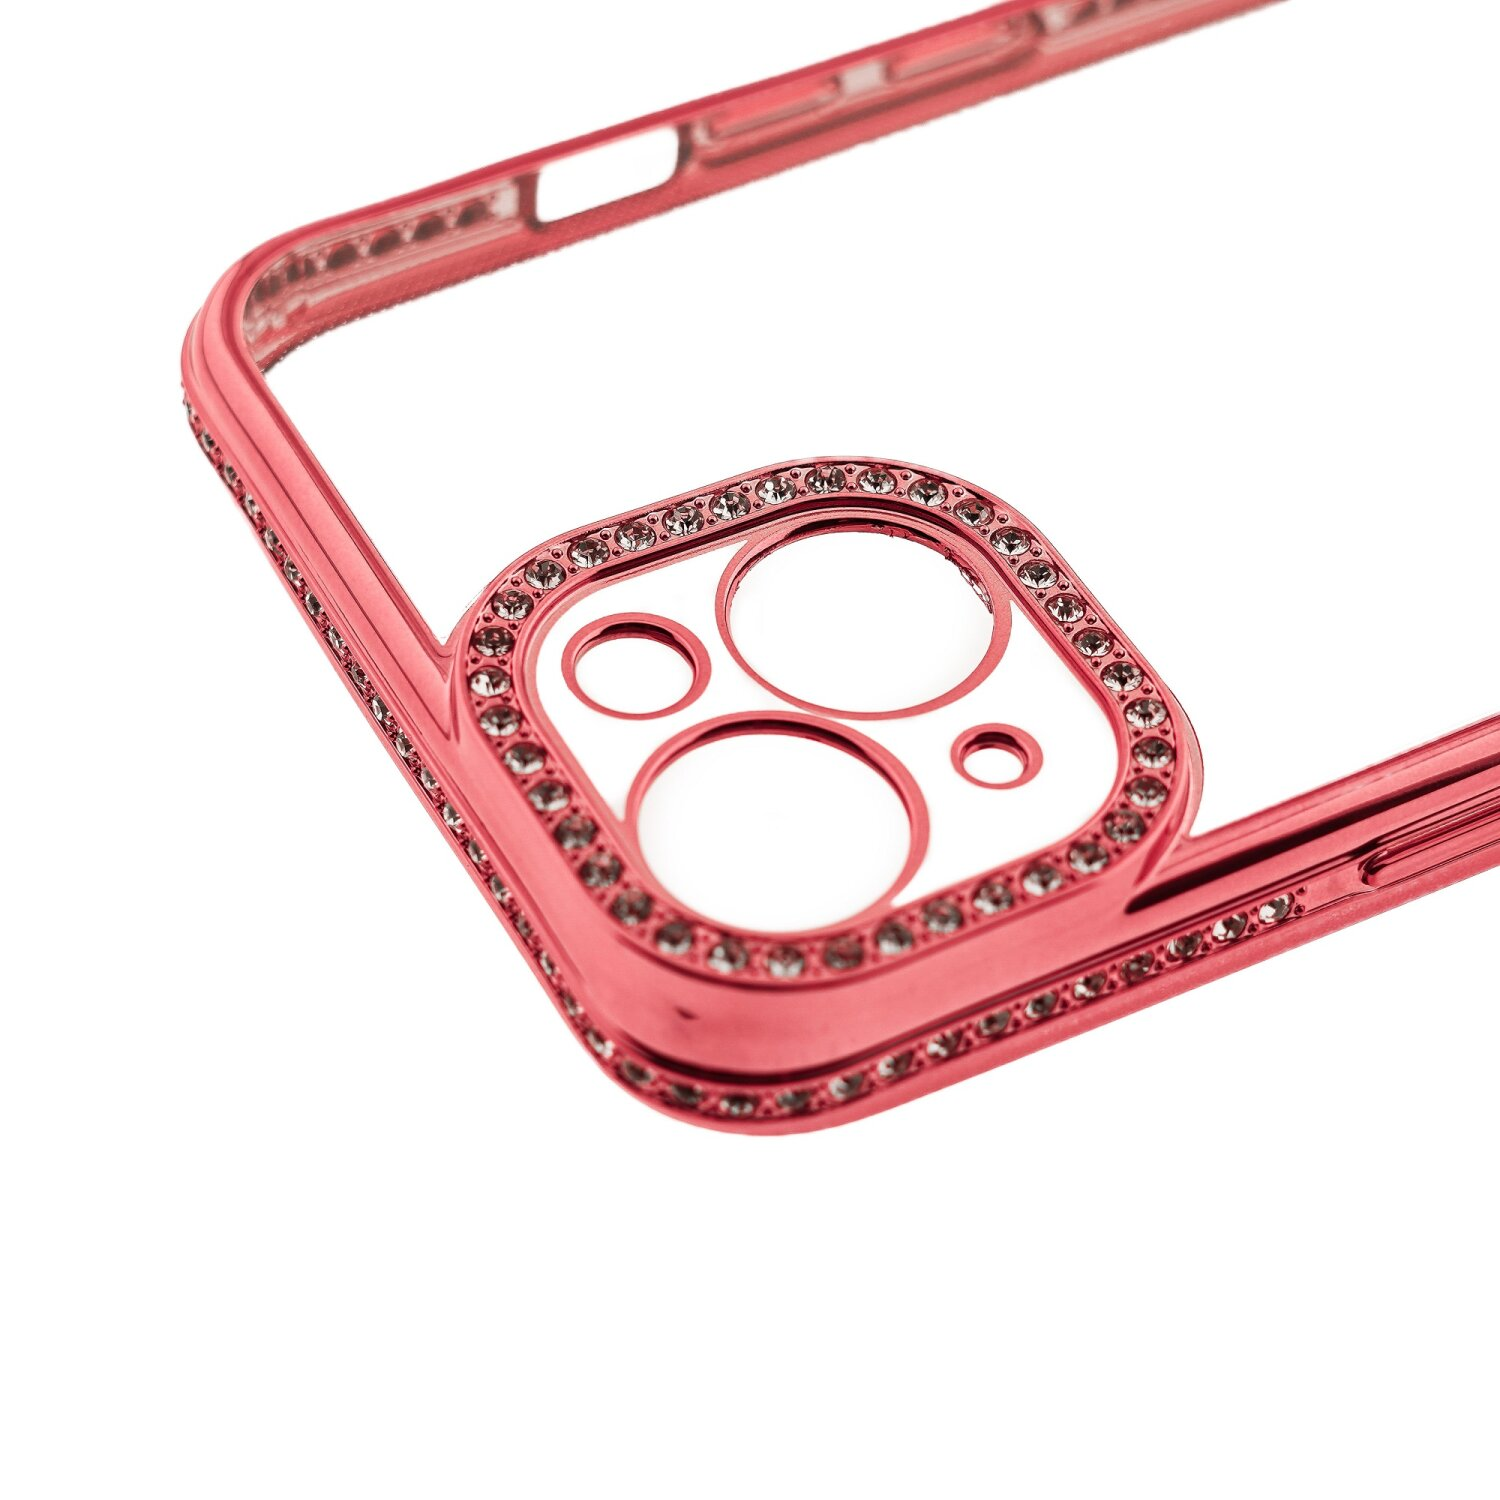 COFI Diamond Pro 14 Hülle, Pink Apple, Max, iPhone Backcover